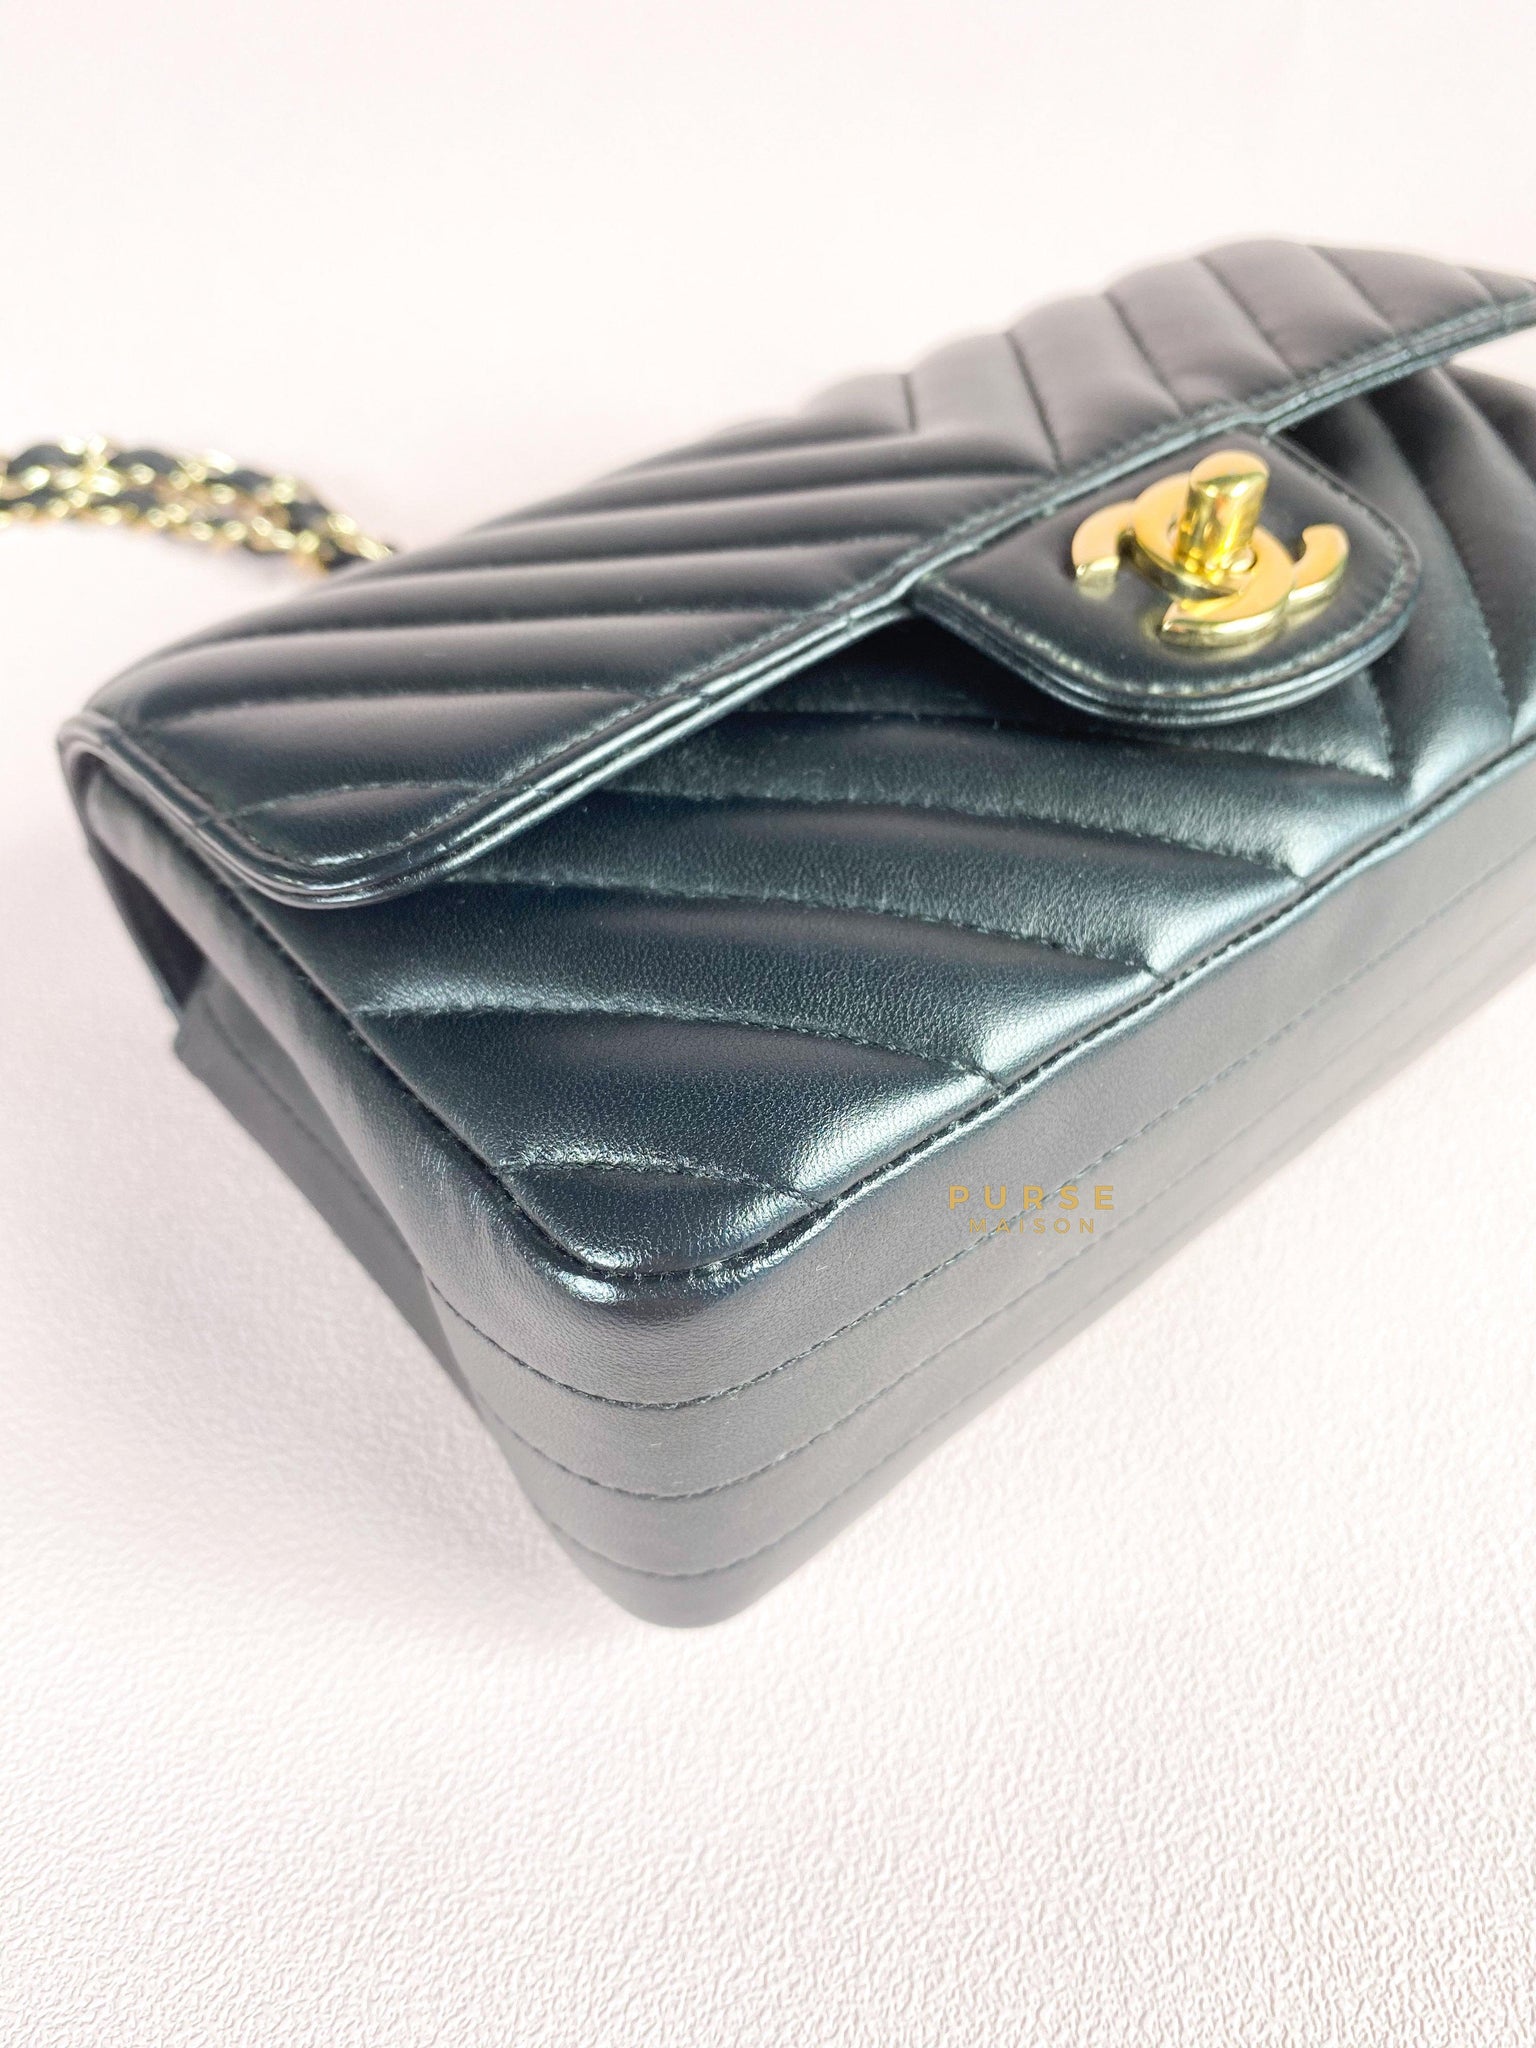 Chanel Black Mini Rectangle Chevron Lambskin and Yellow Gold Hardware Series 23 | Purse Maison Luxury Bags Shop